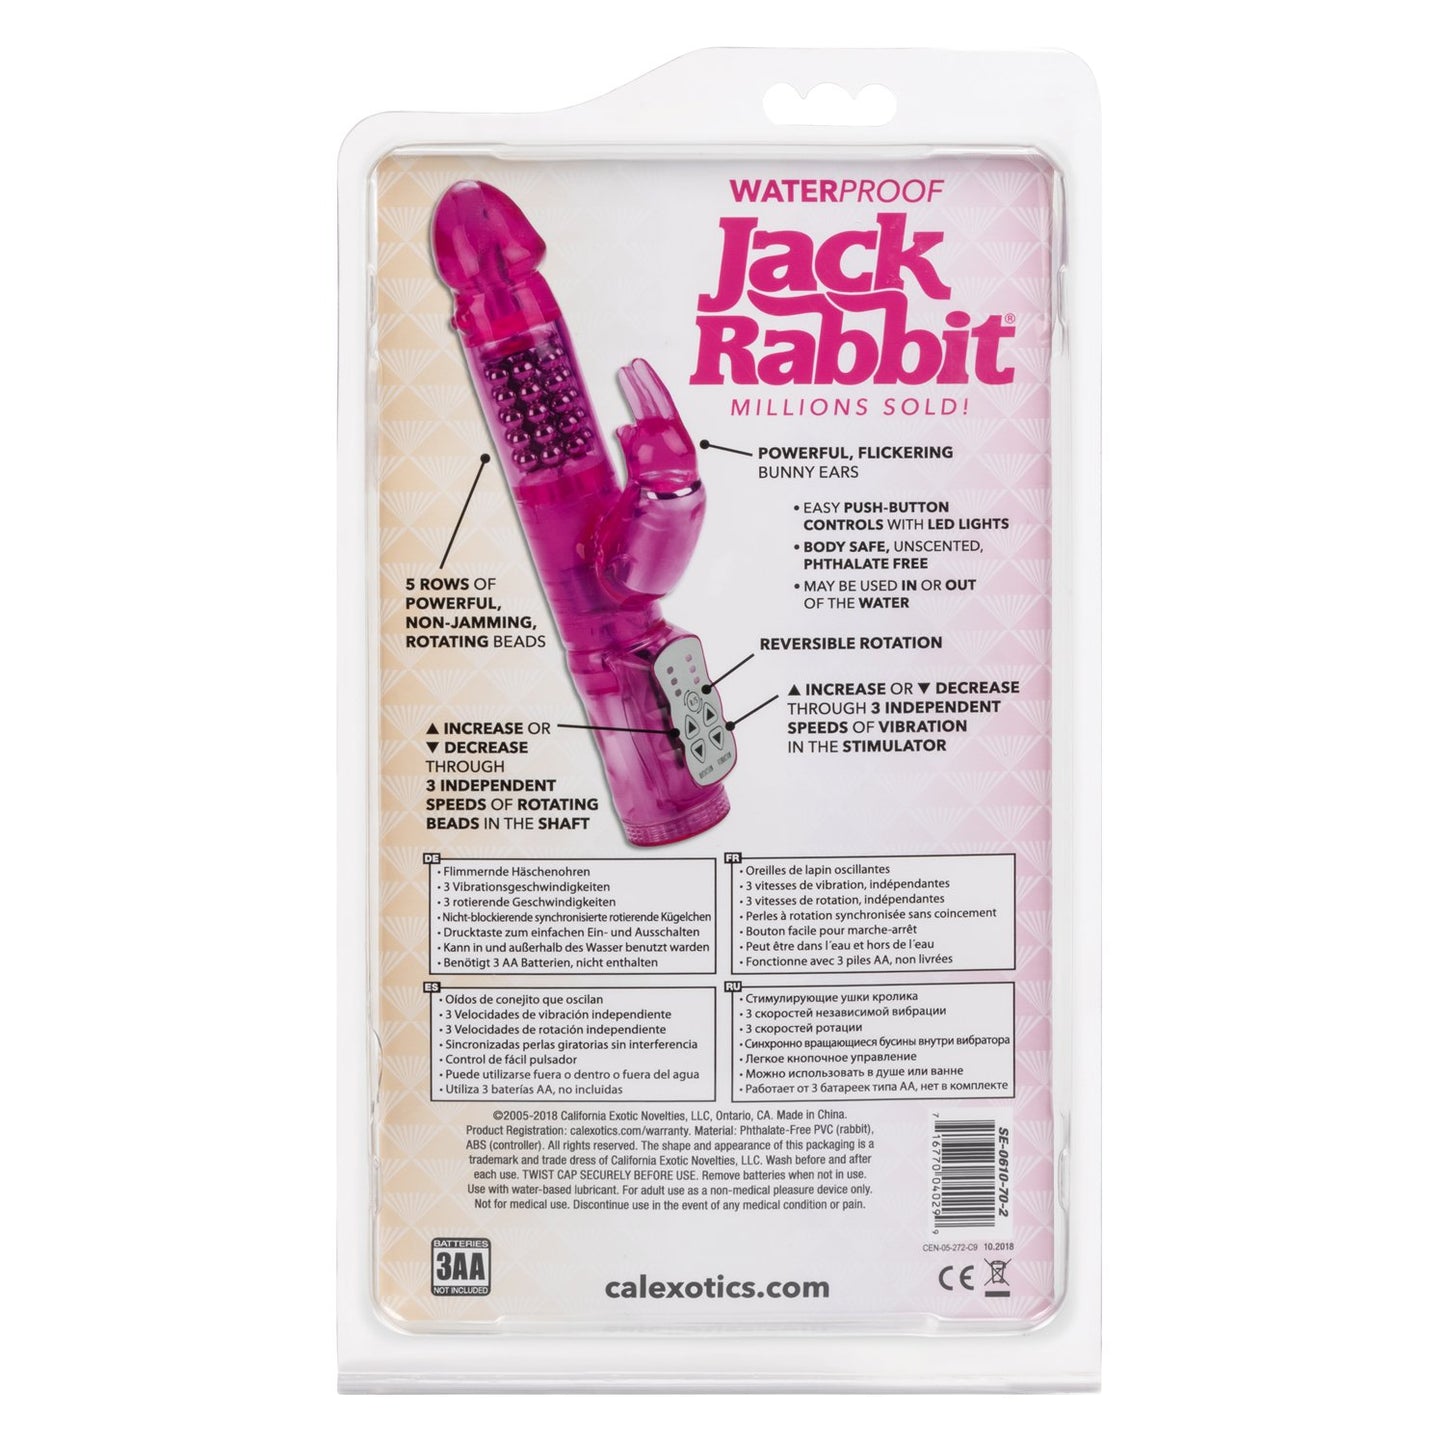 Jack Rabbit Waterproof Jack Rabbit - 5 Rows